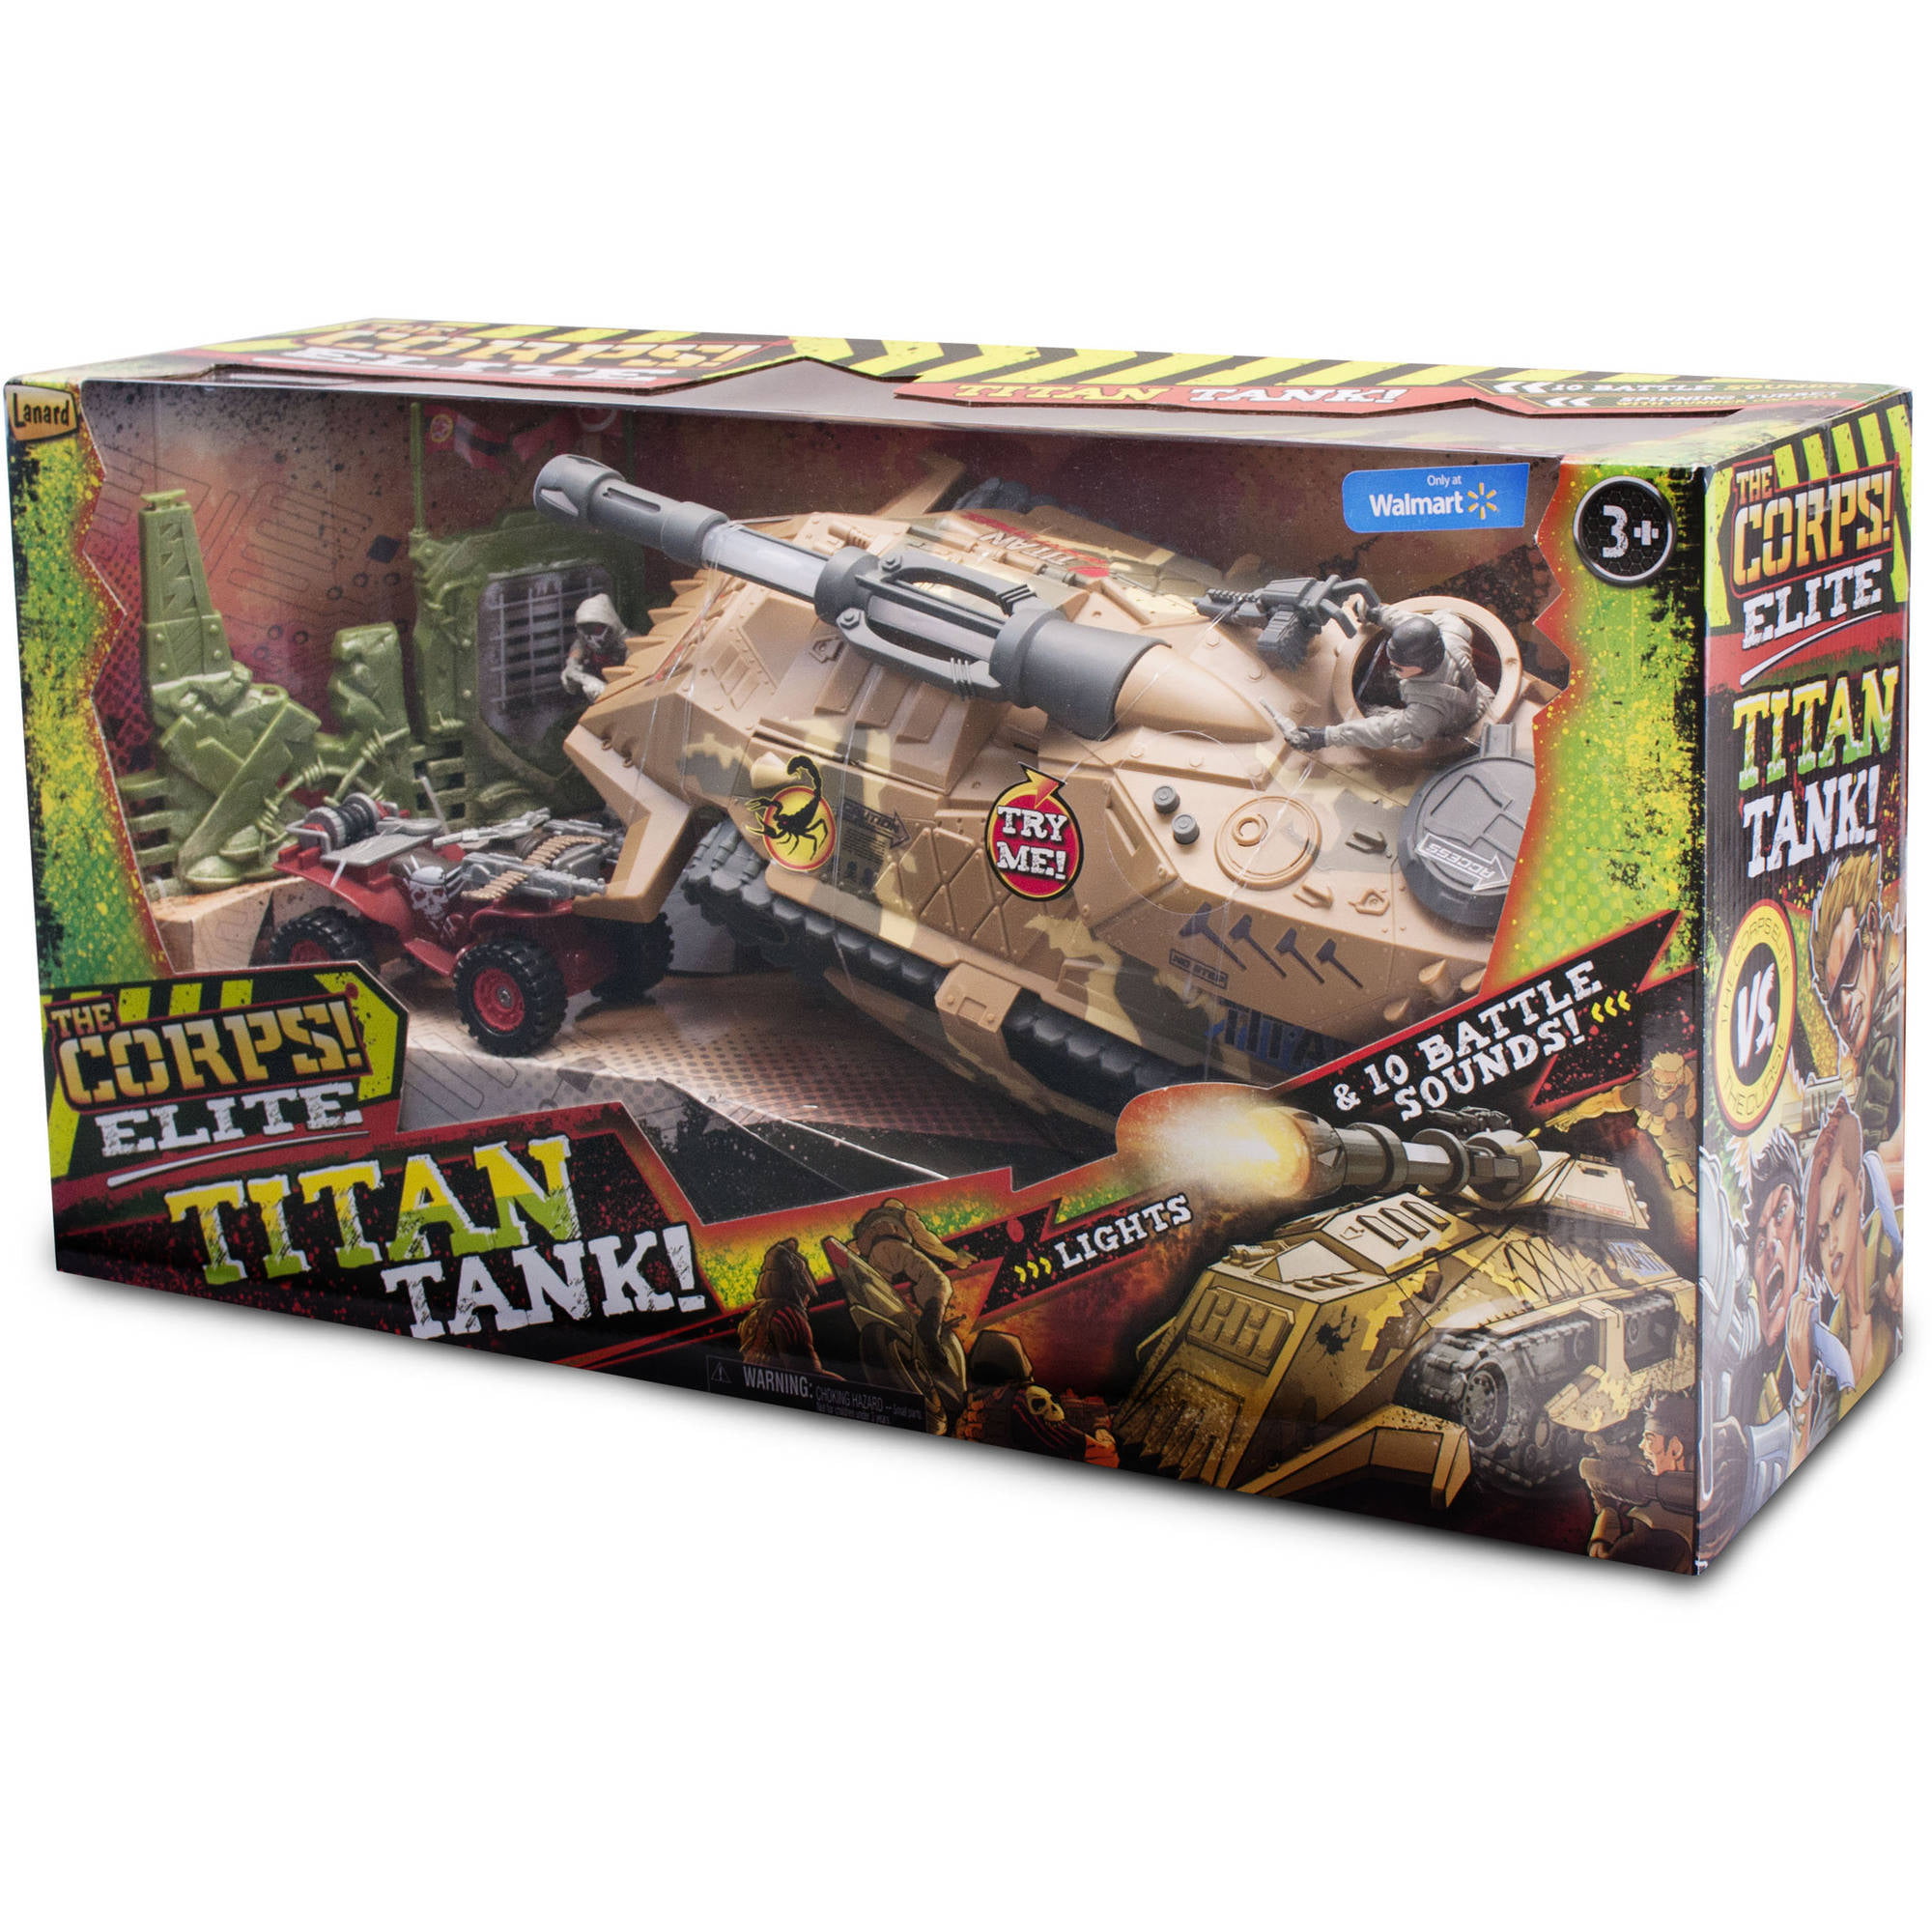 the corps elite battle titan tank